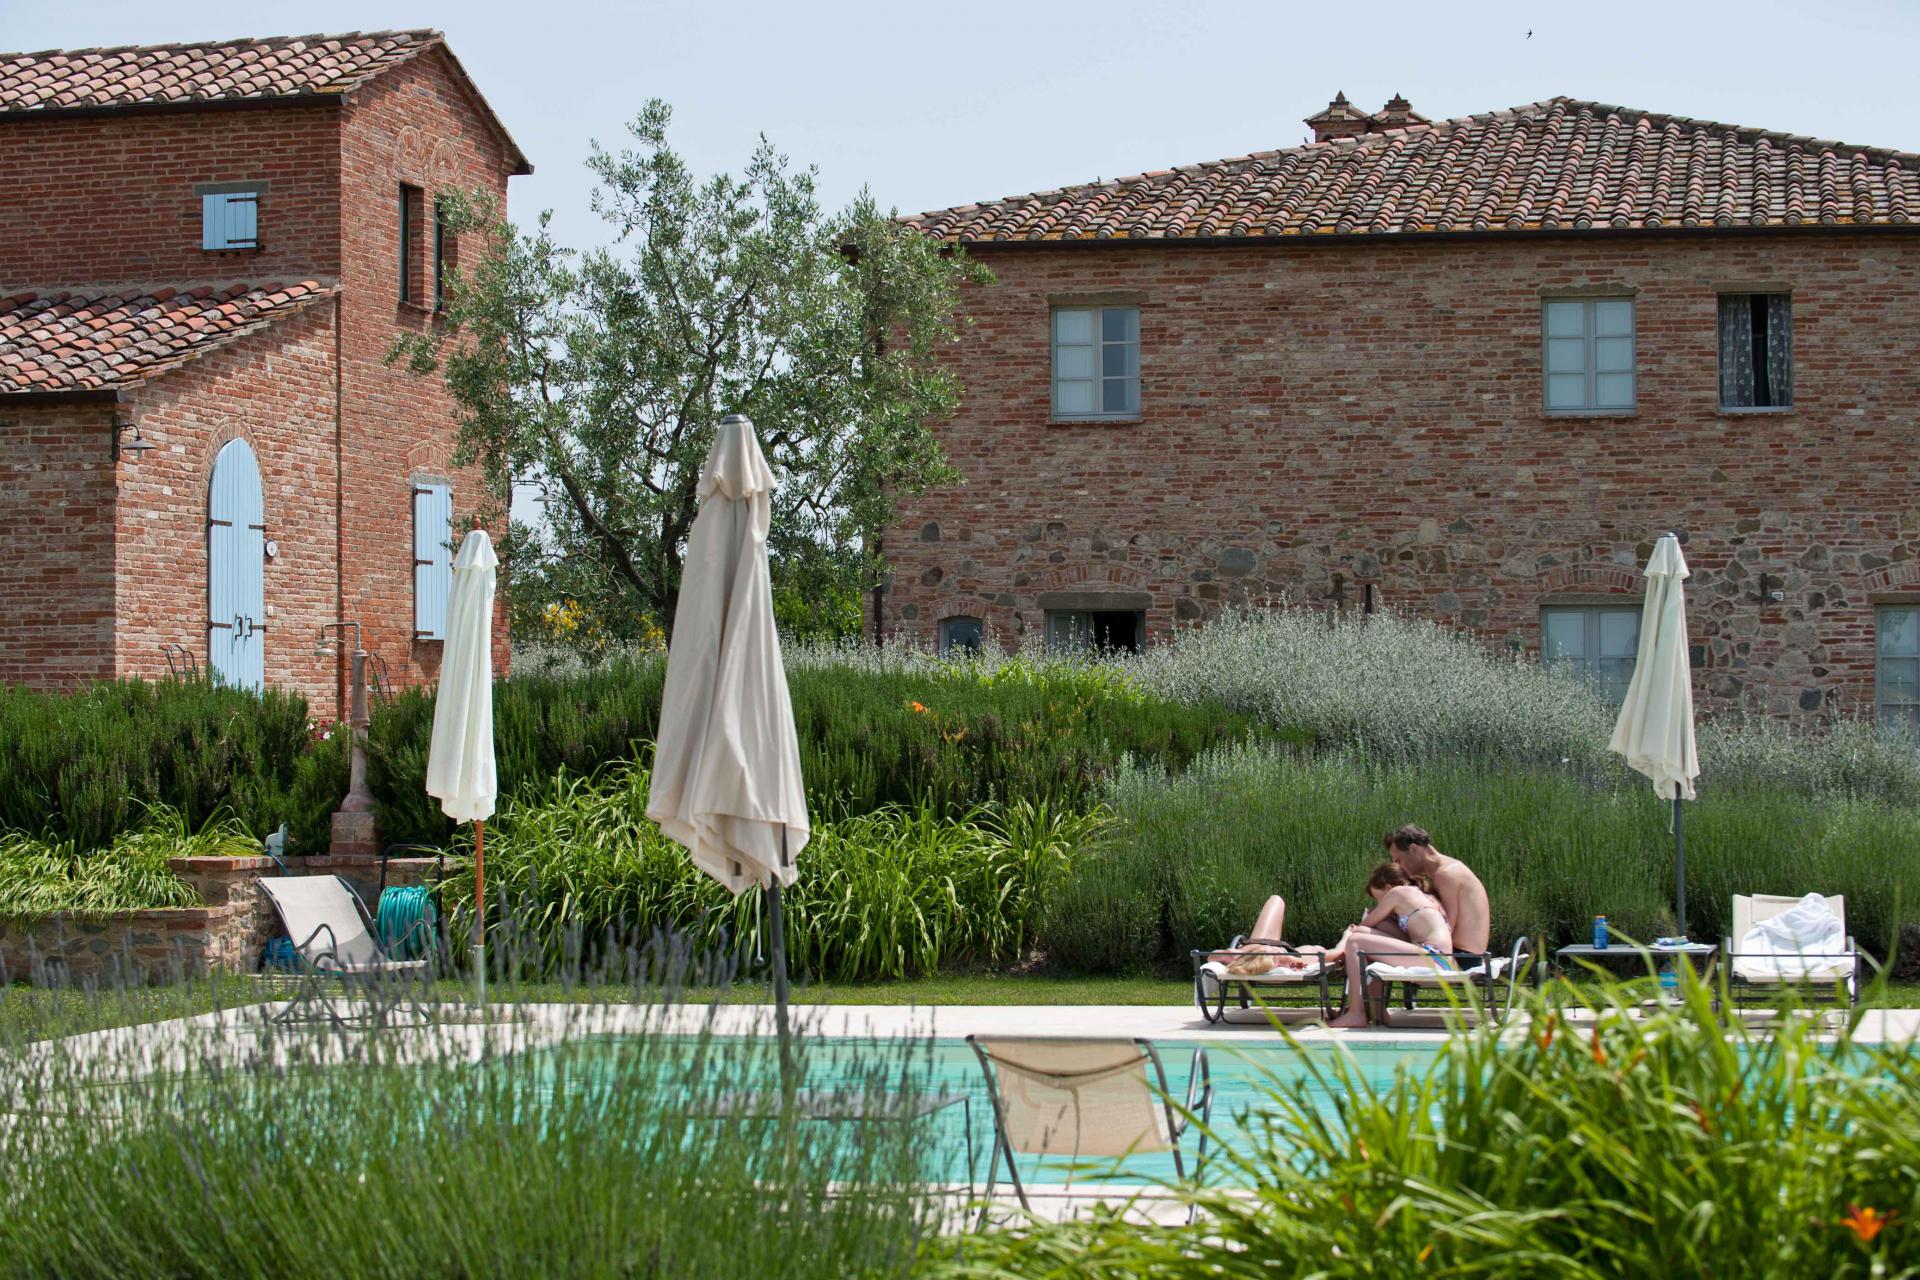 Agriturismo Toscane Agriturismo nabij Arezzo  – heerlijk relaxen | myitaly.nl